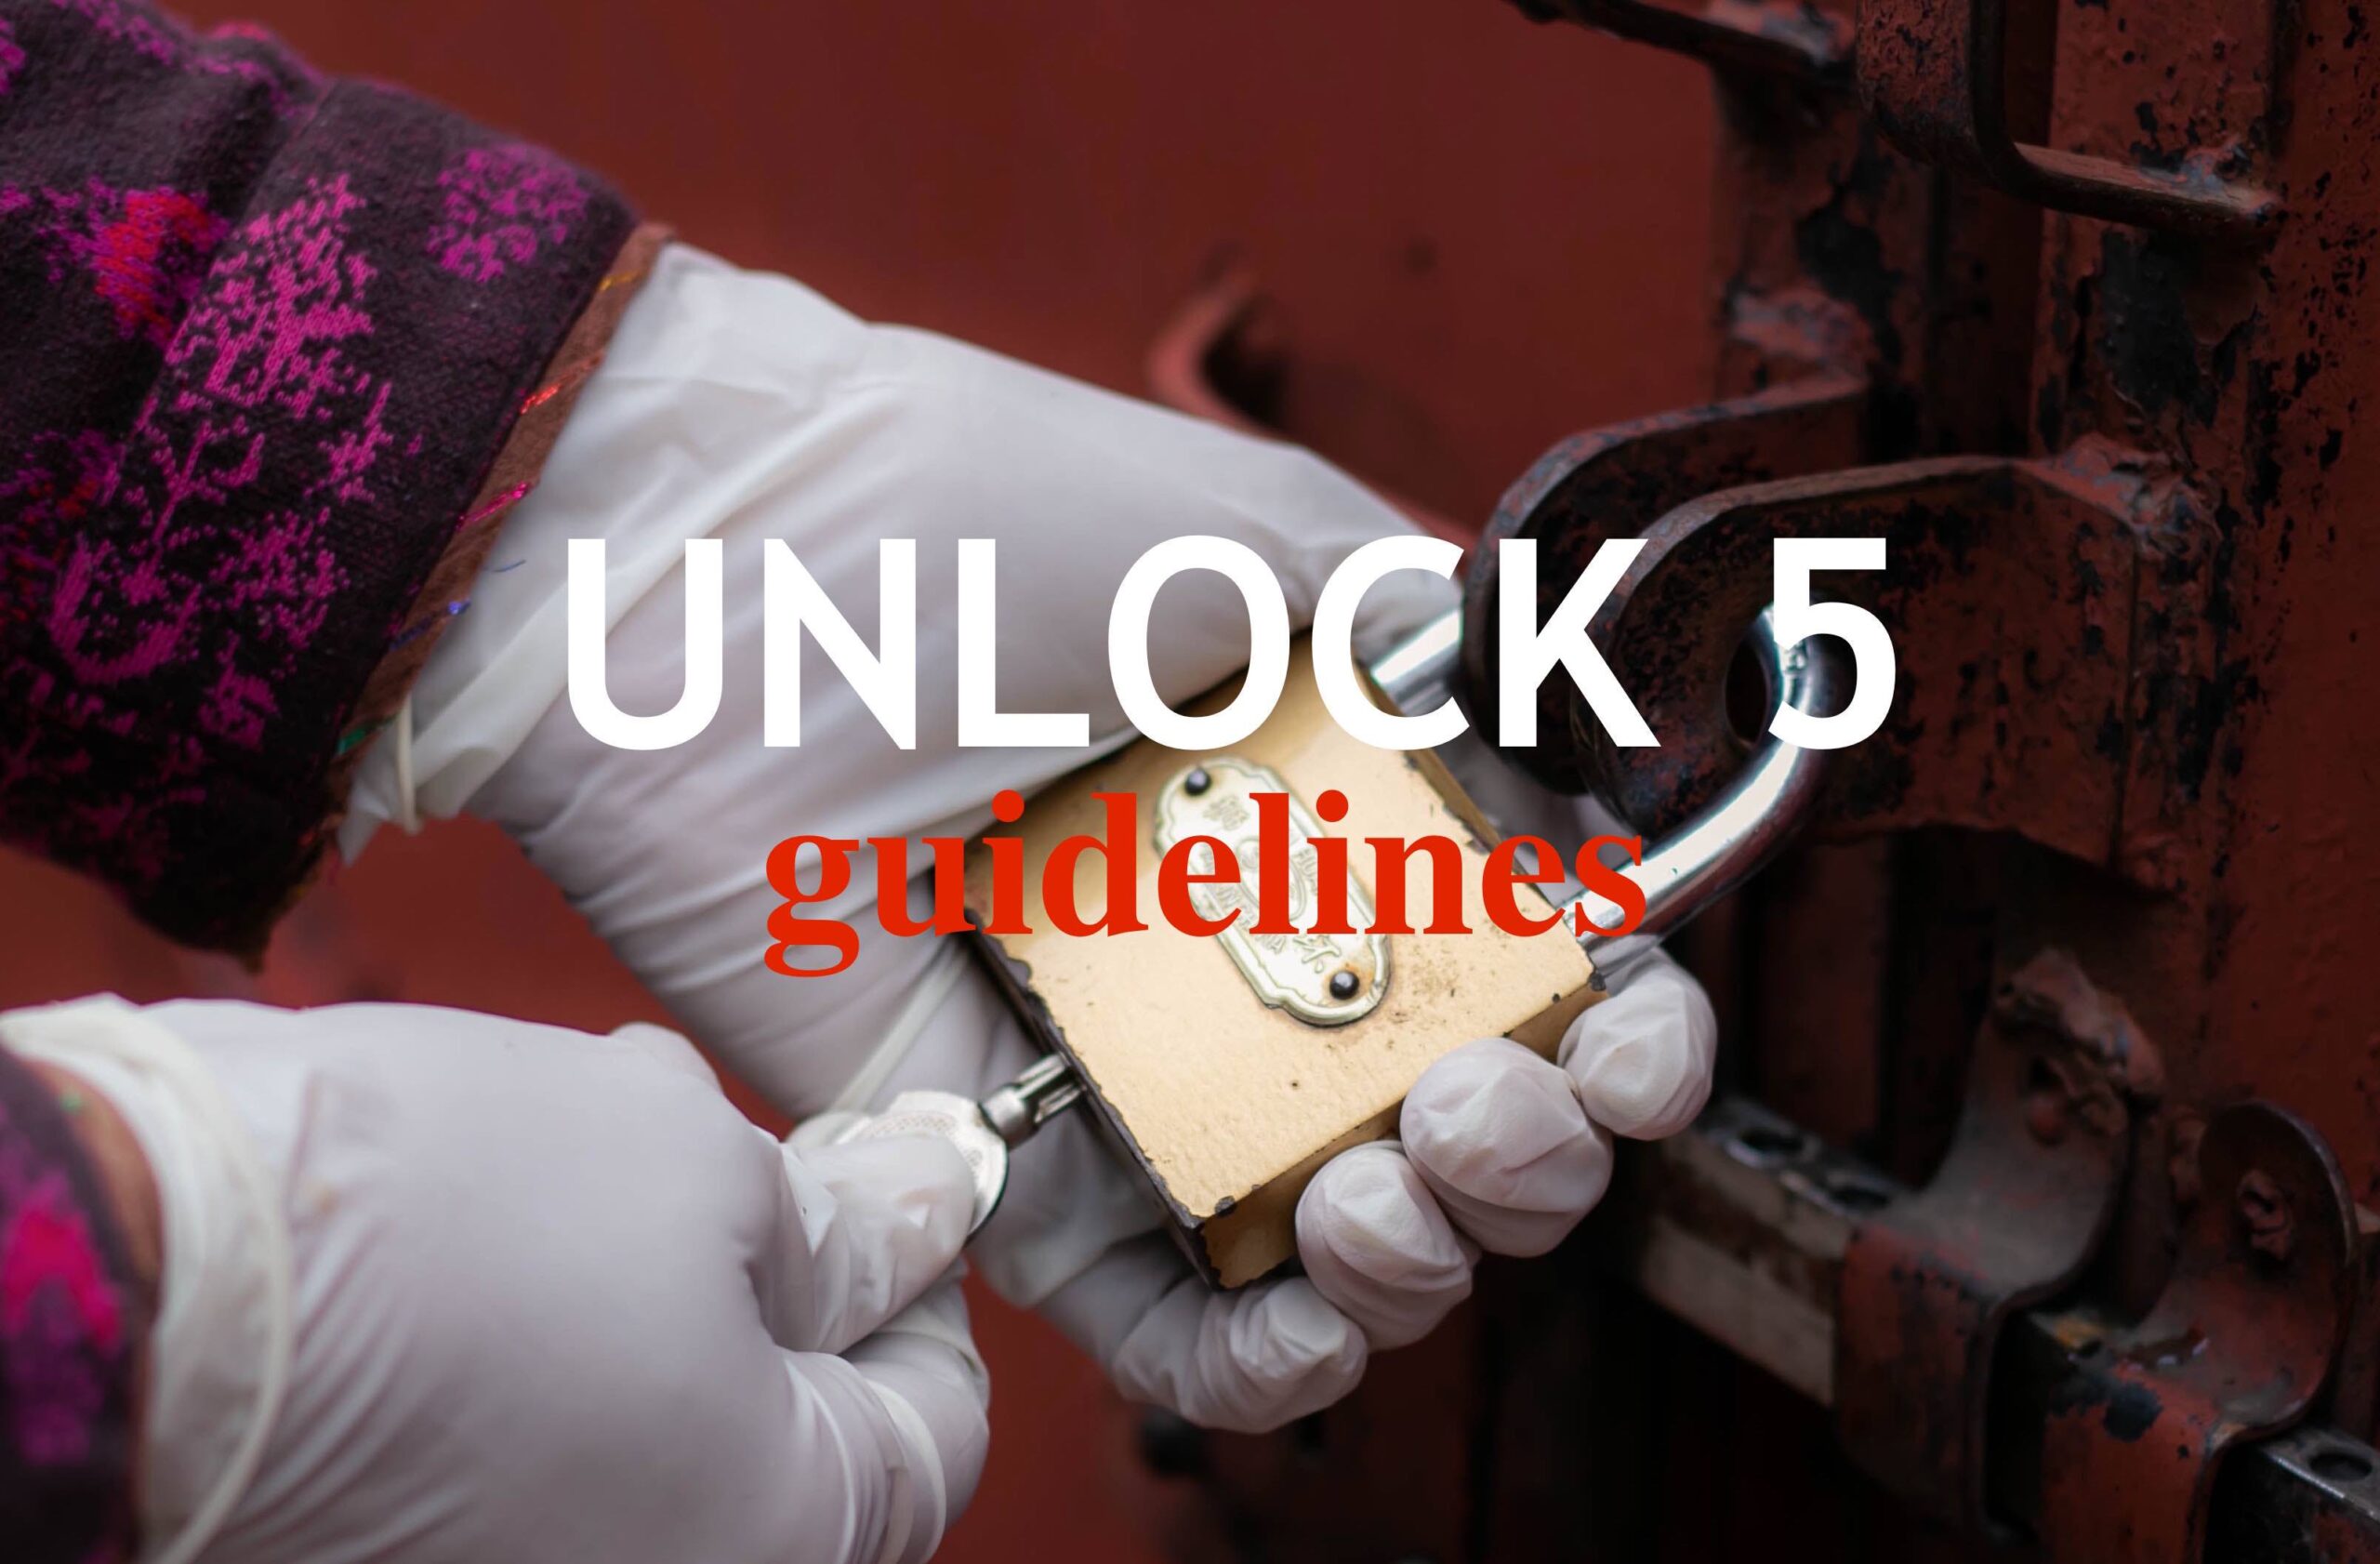 Unlock 5 guidelines